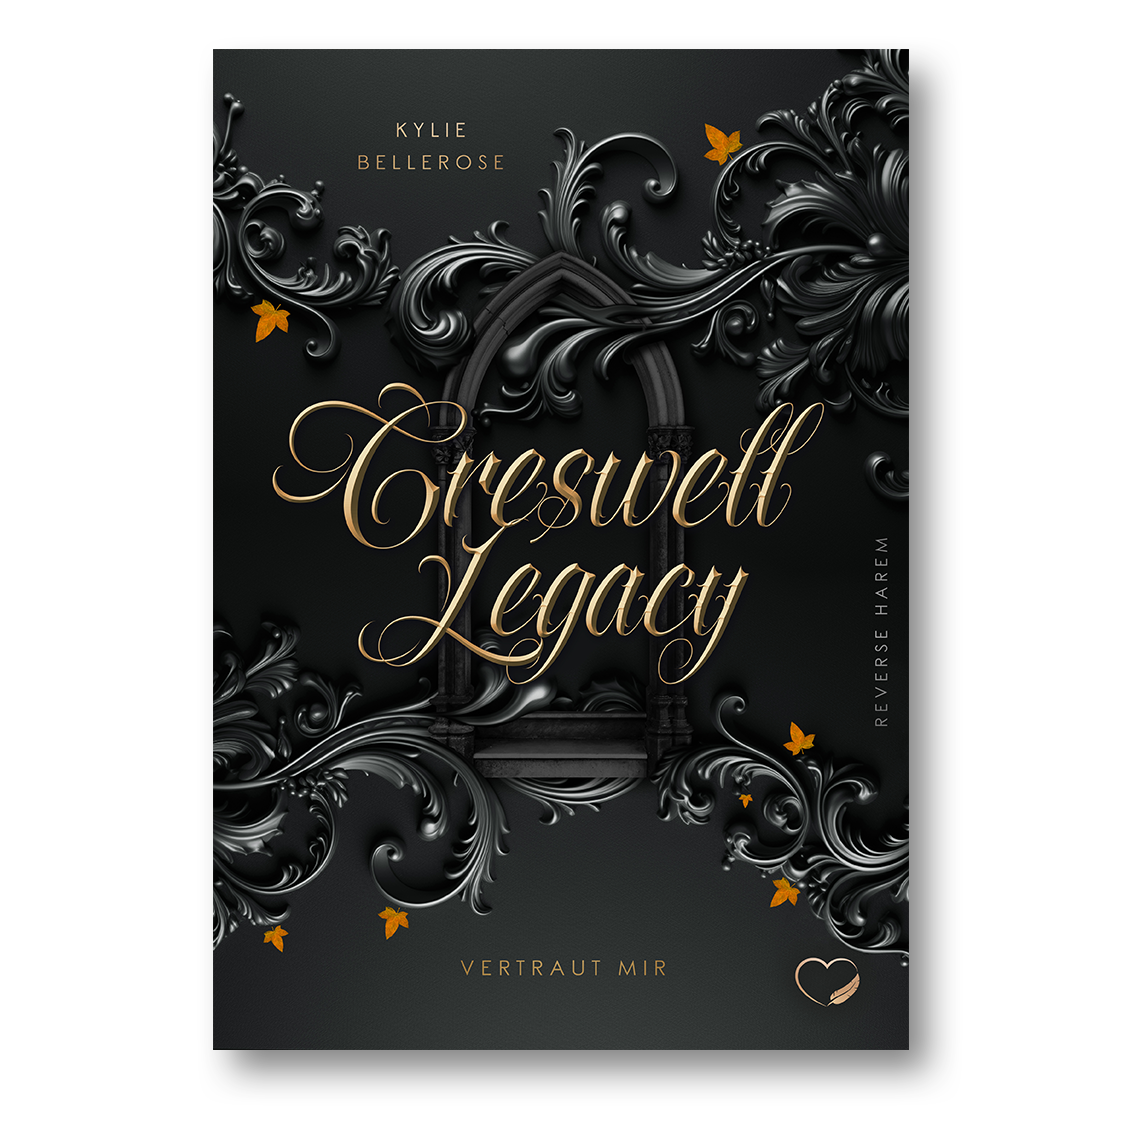     Creswell Legacy (Band 2)